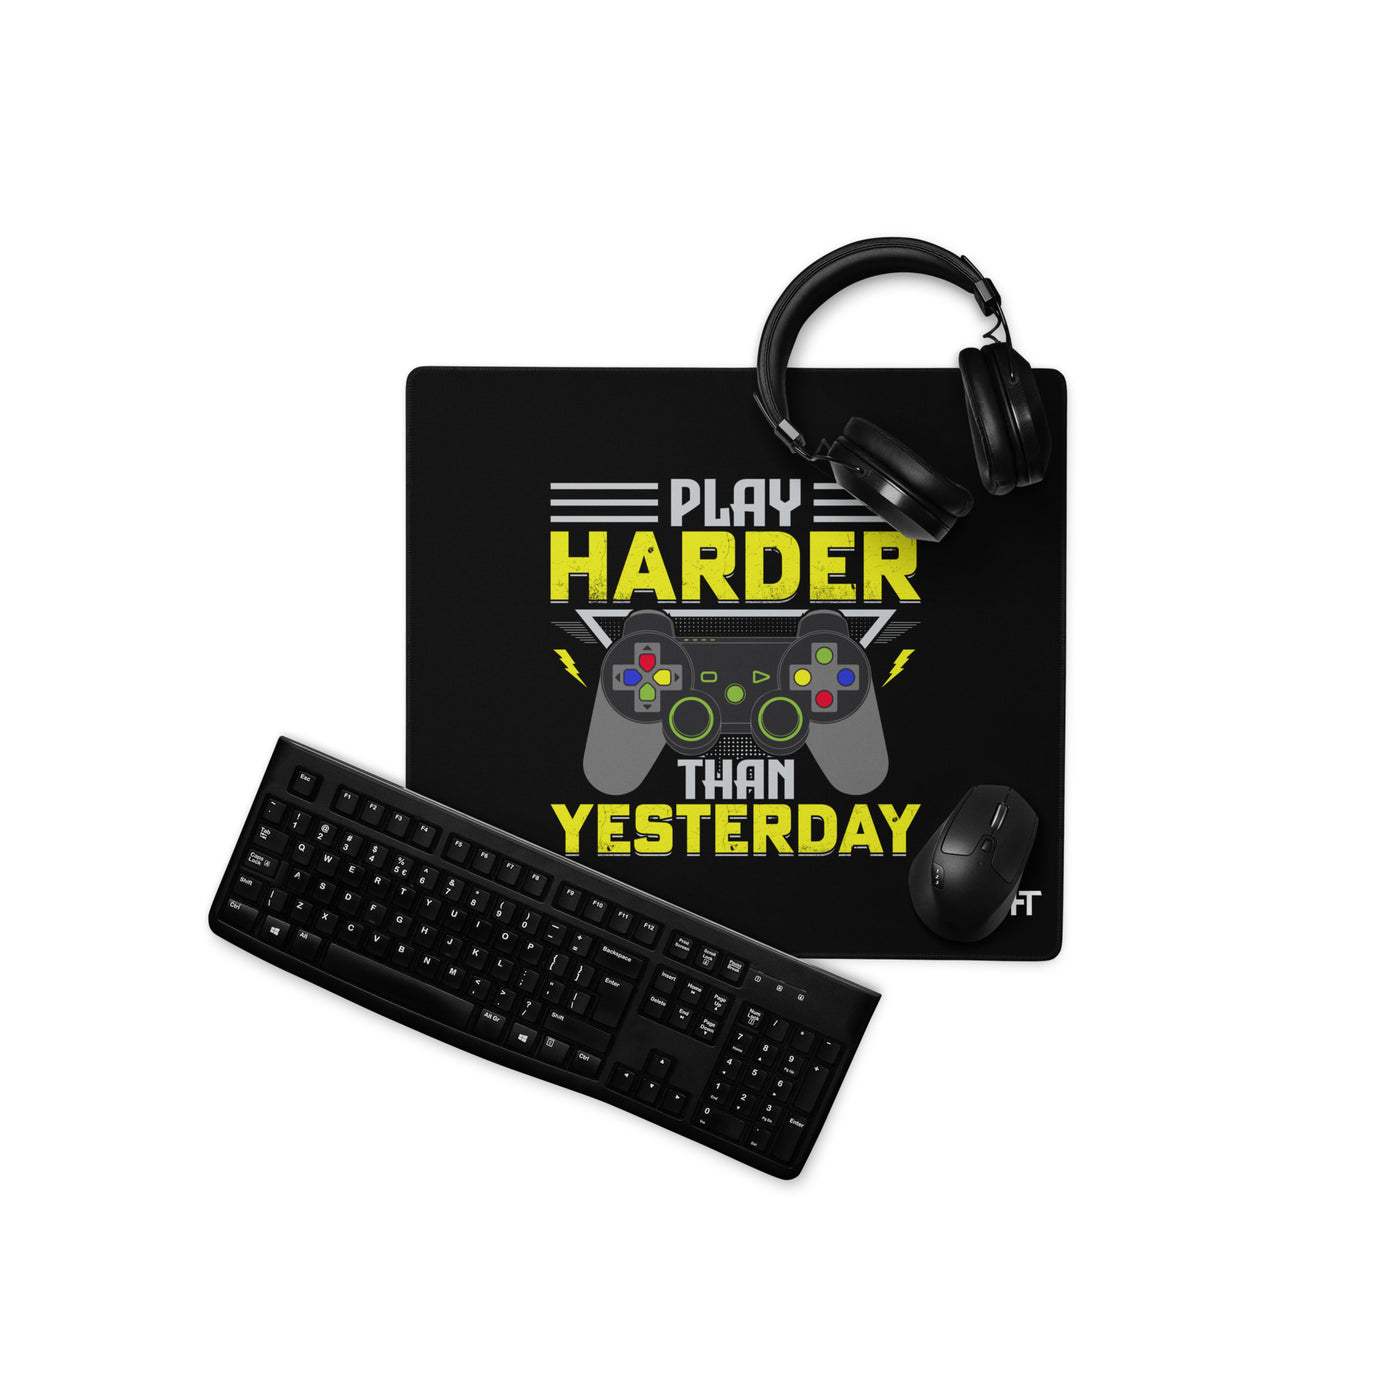 Play harder than Yesterday - Desk Mat